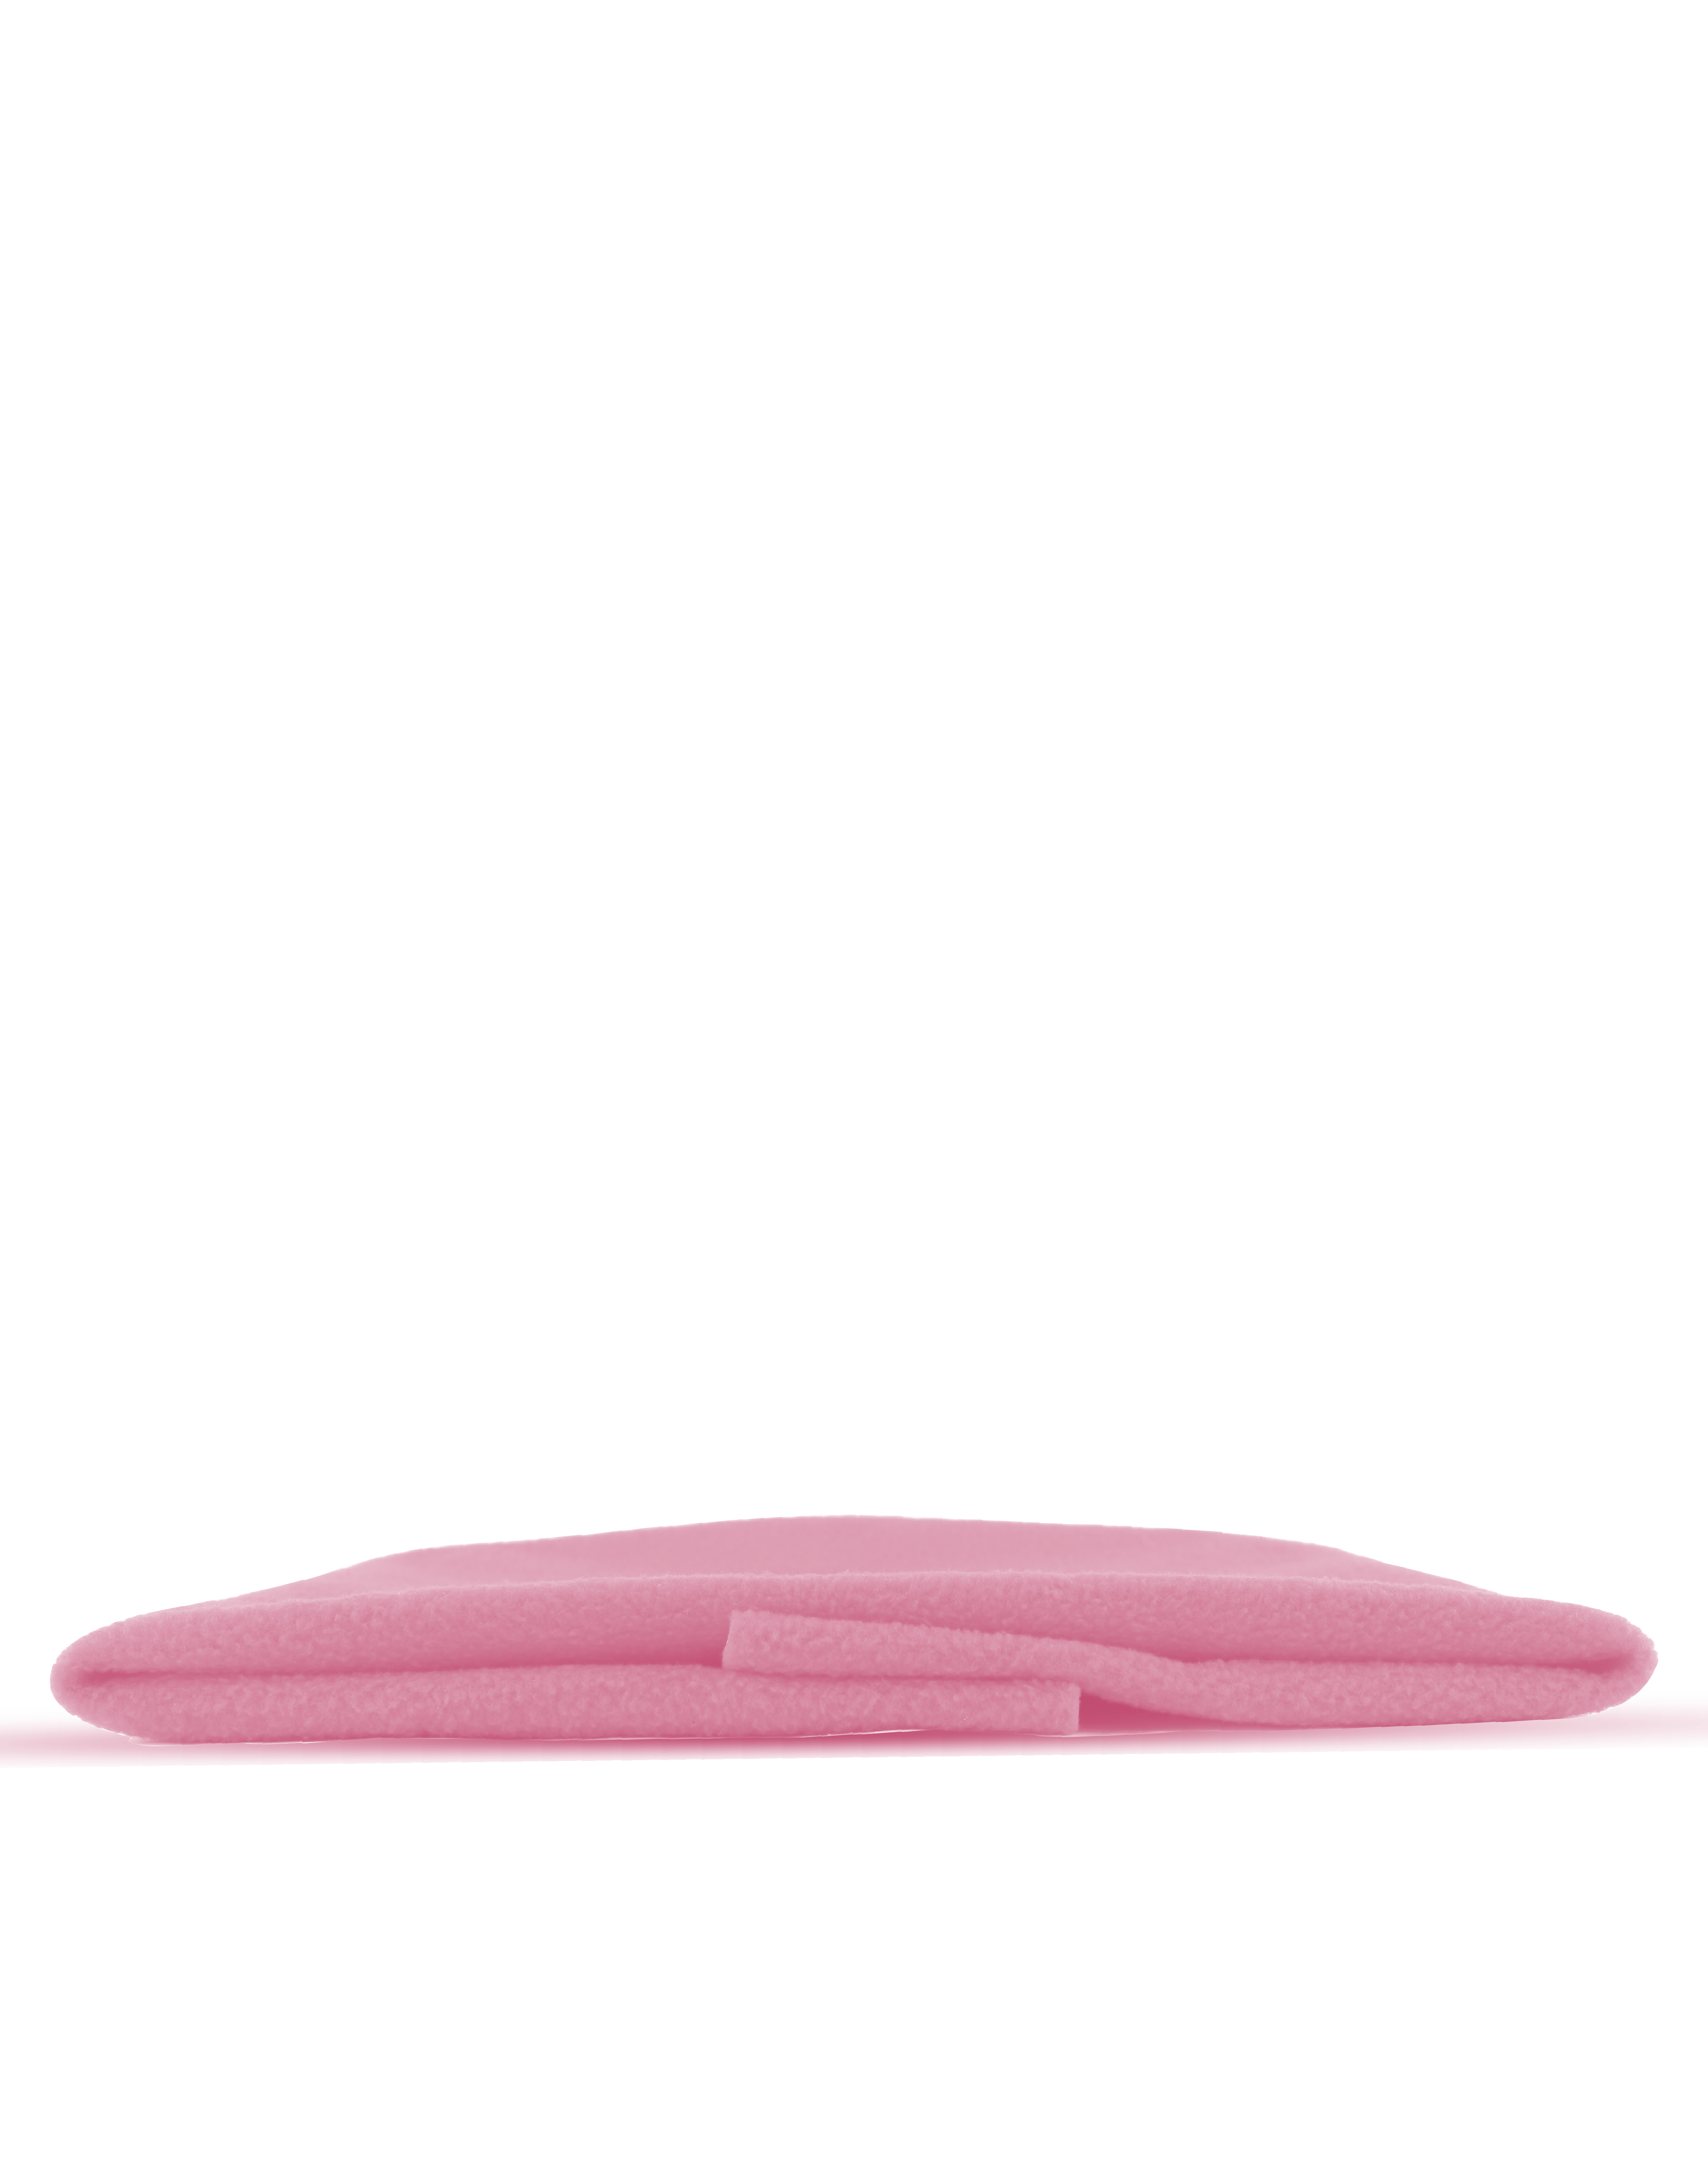 Steelbird Premium Care Baby Bed Sheet -InstaDry Extra Absorbent Completely Water-Proof & Reusable Mat/Bed Protector Sleeping Mat-Pink-S (50 Cm* 70 Cm) (Pink)